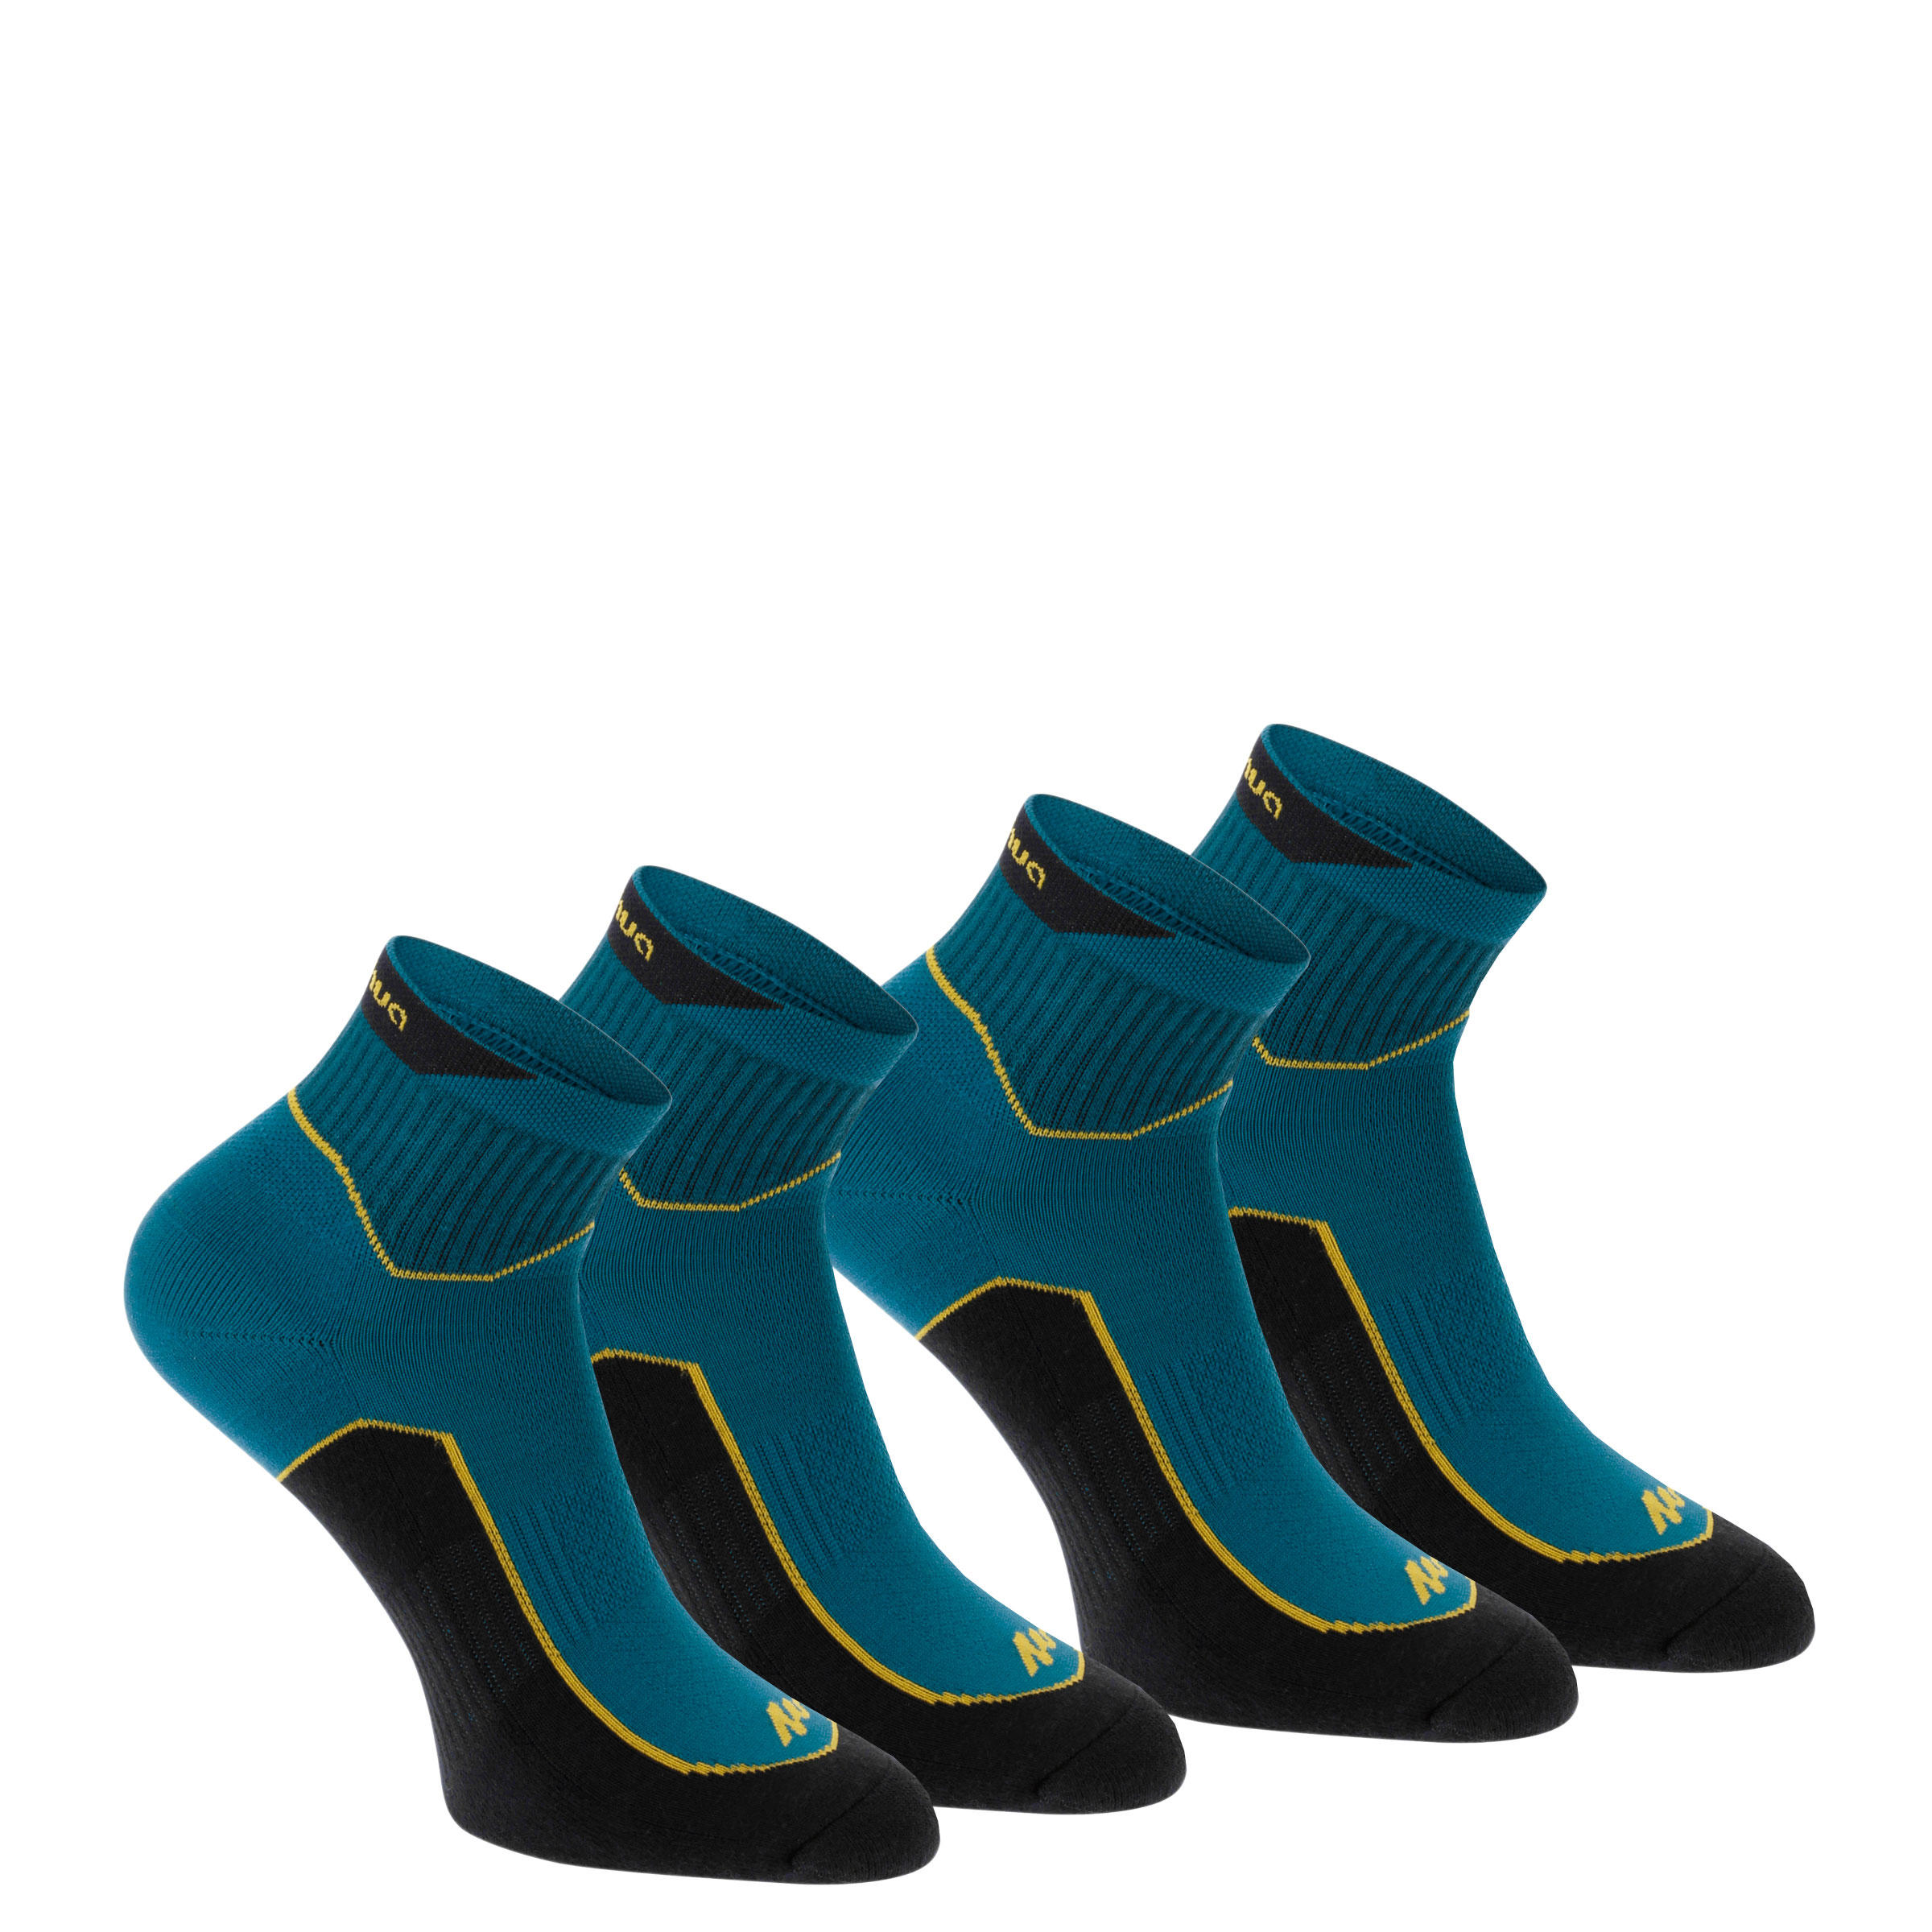 QUECHUA 2 pairs of adult’s medium Arpenaz 100 hiking socks - Blue